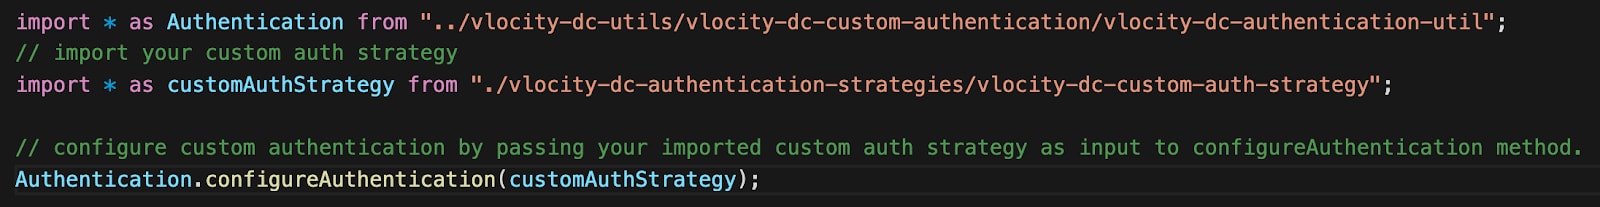 Configure a custom authentication